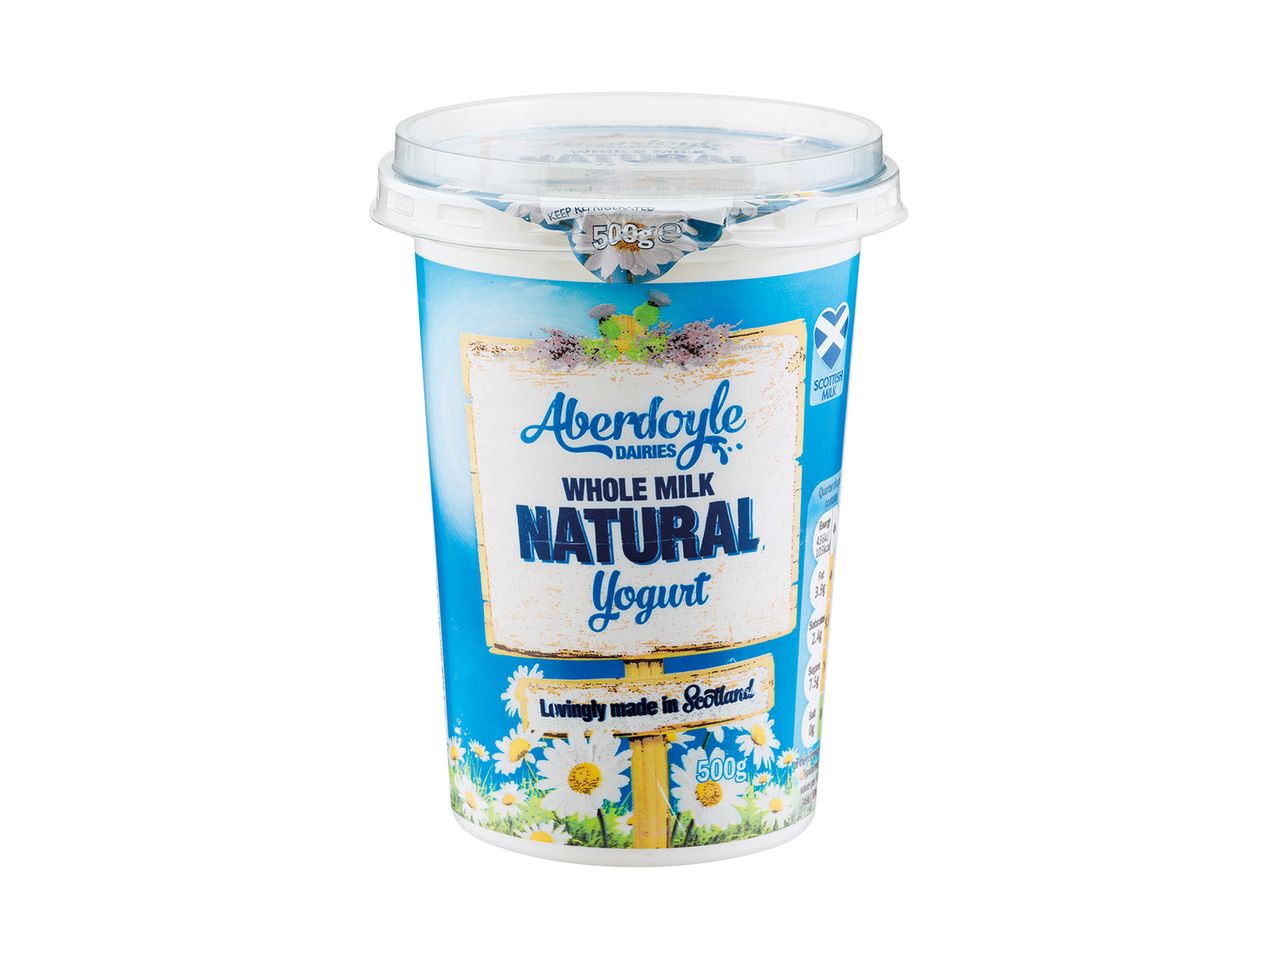 Go to full screen view: Aberdoyle Dairies Full Fat Natural Yoghurt - Image 1